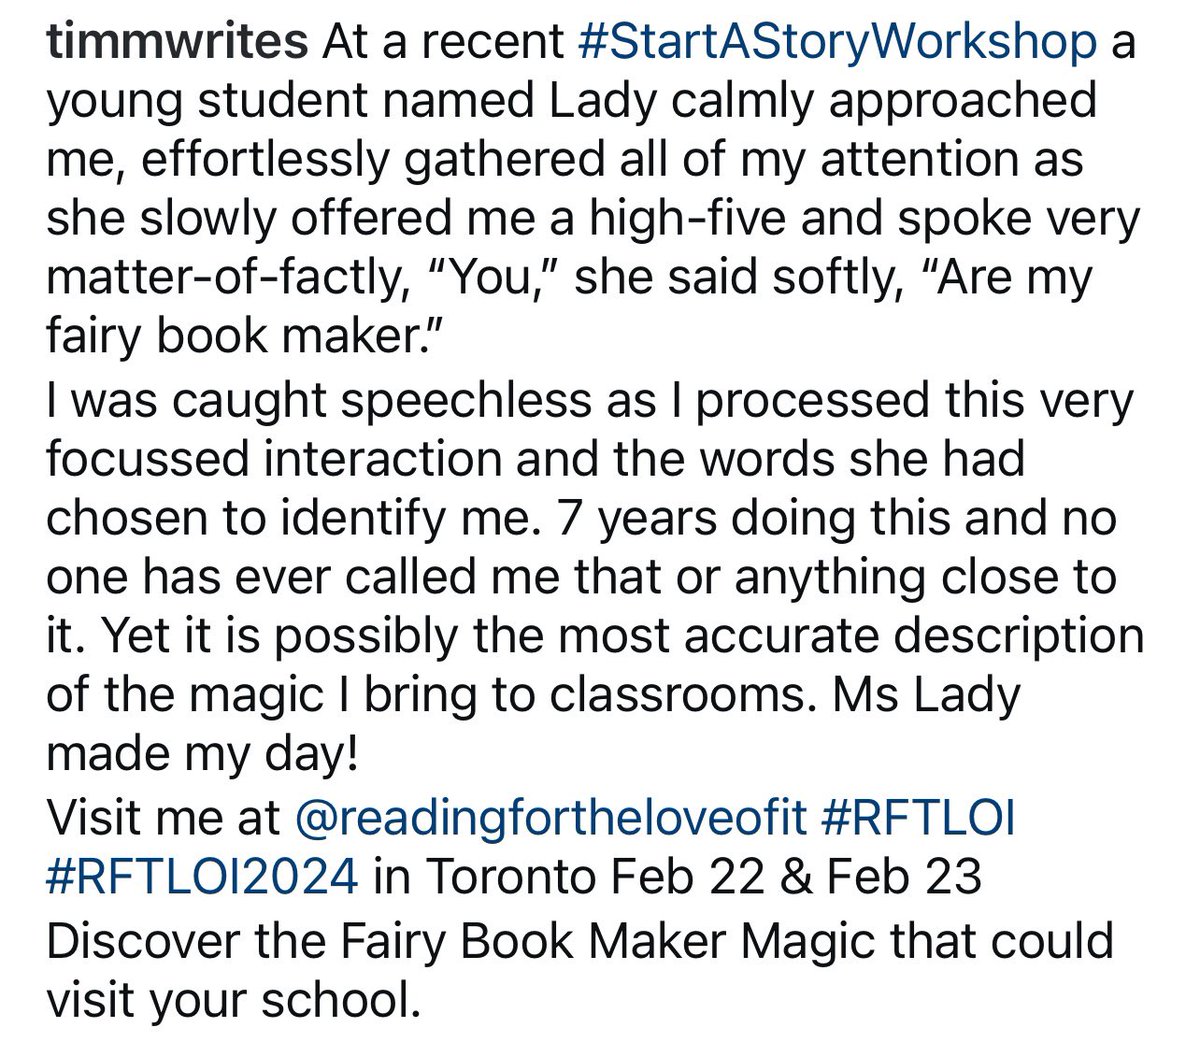 #FairyBookMaker #StartAStoryWorkshop #RFTLOI #RFTLOI2024 @eysreading